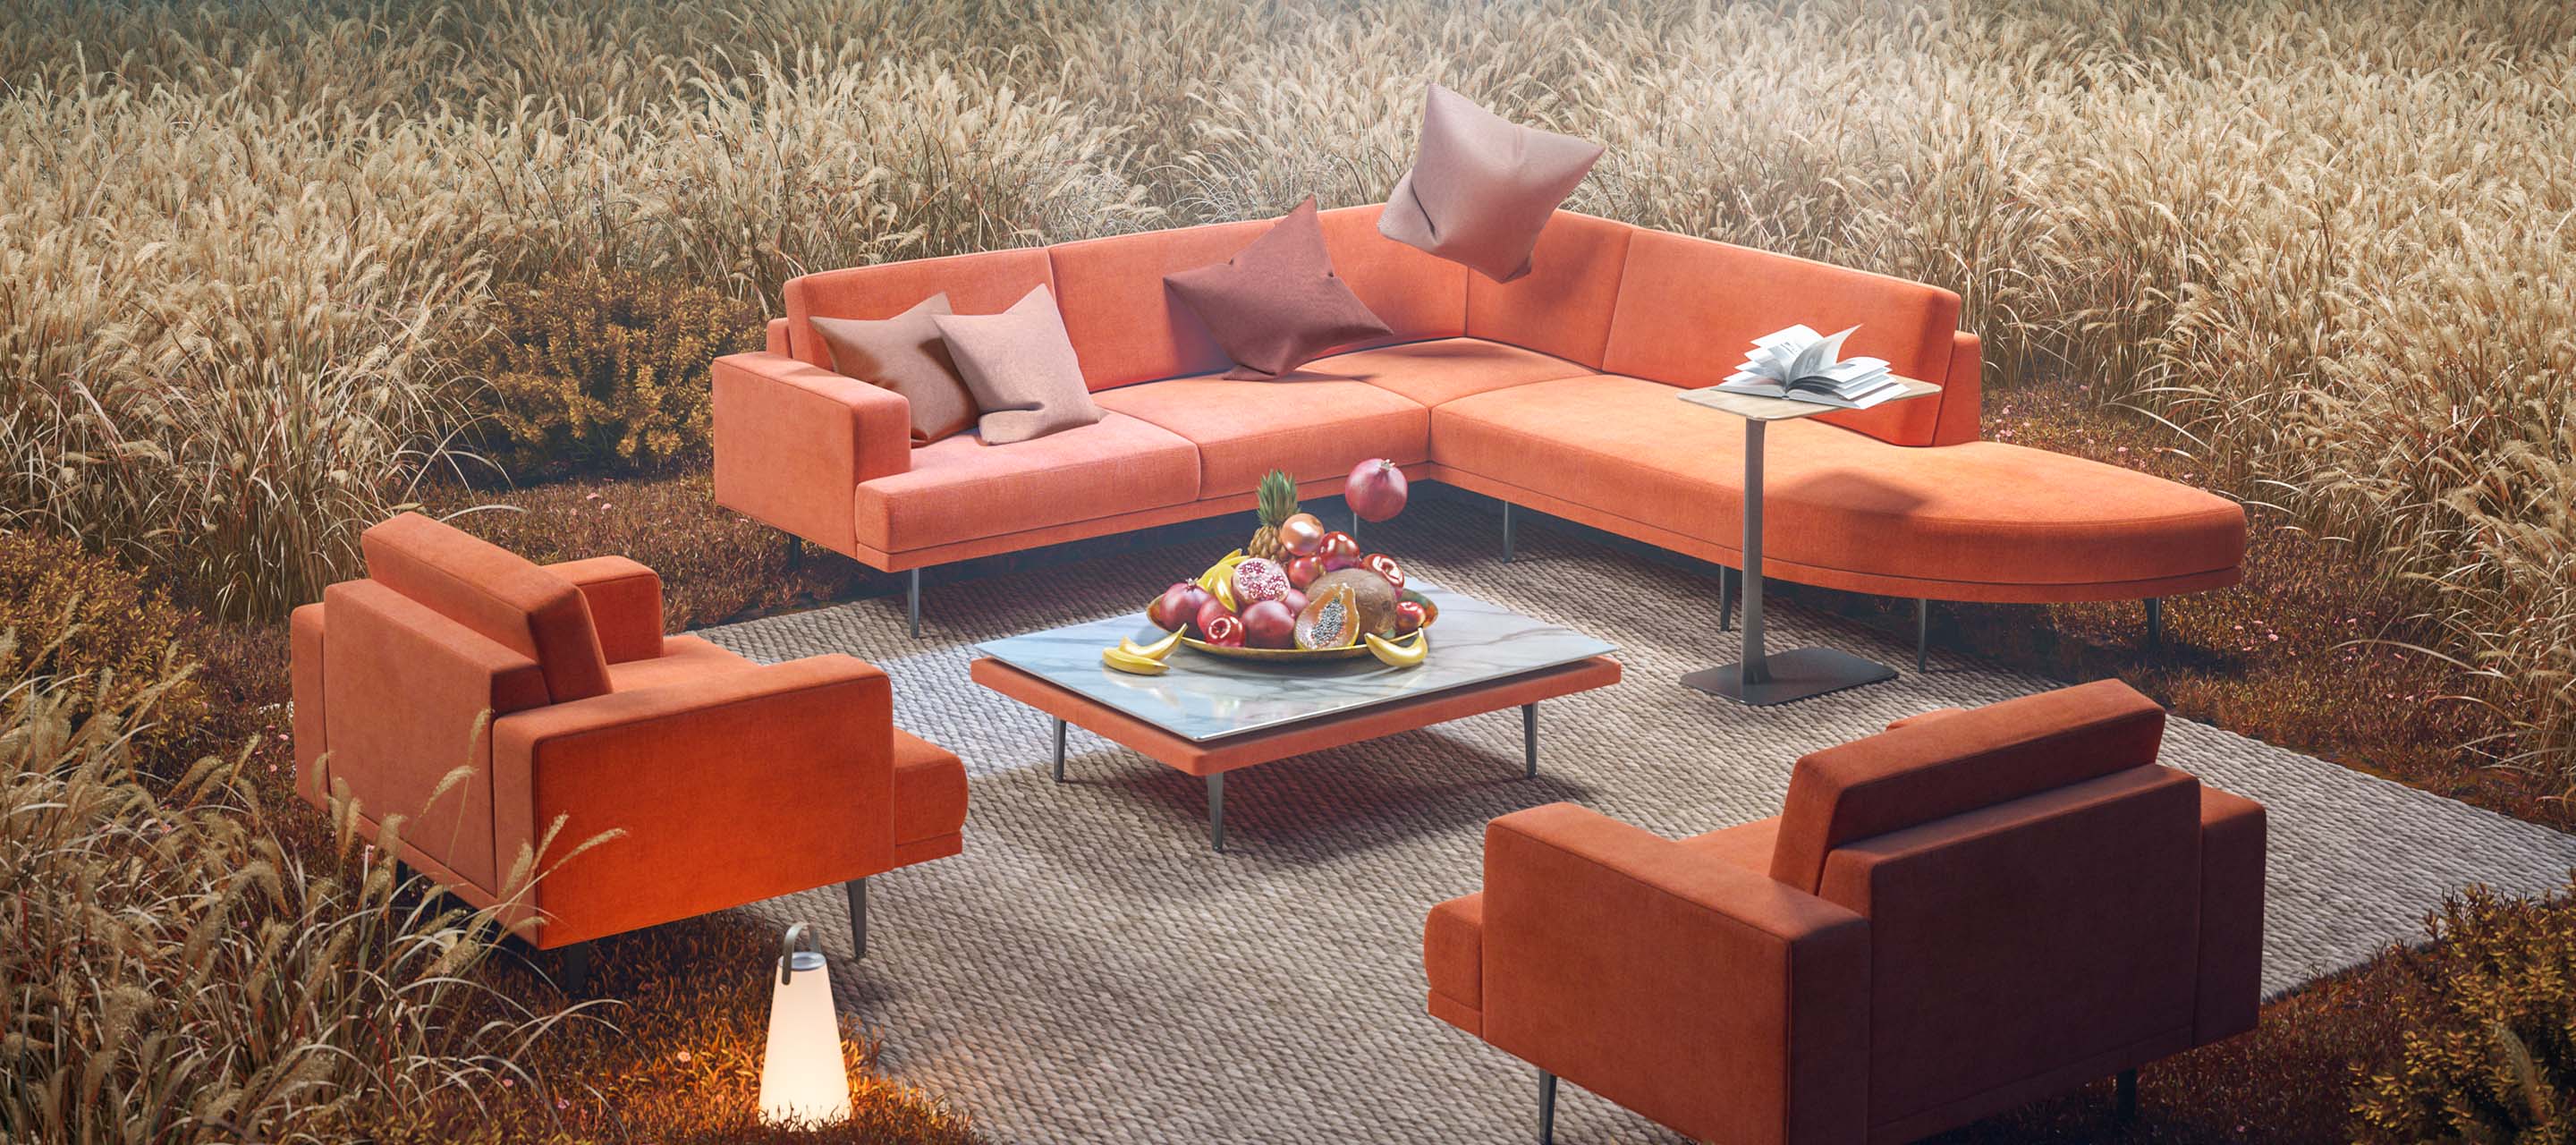 Haworth Lyda lounge in orange upholstery/